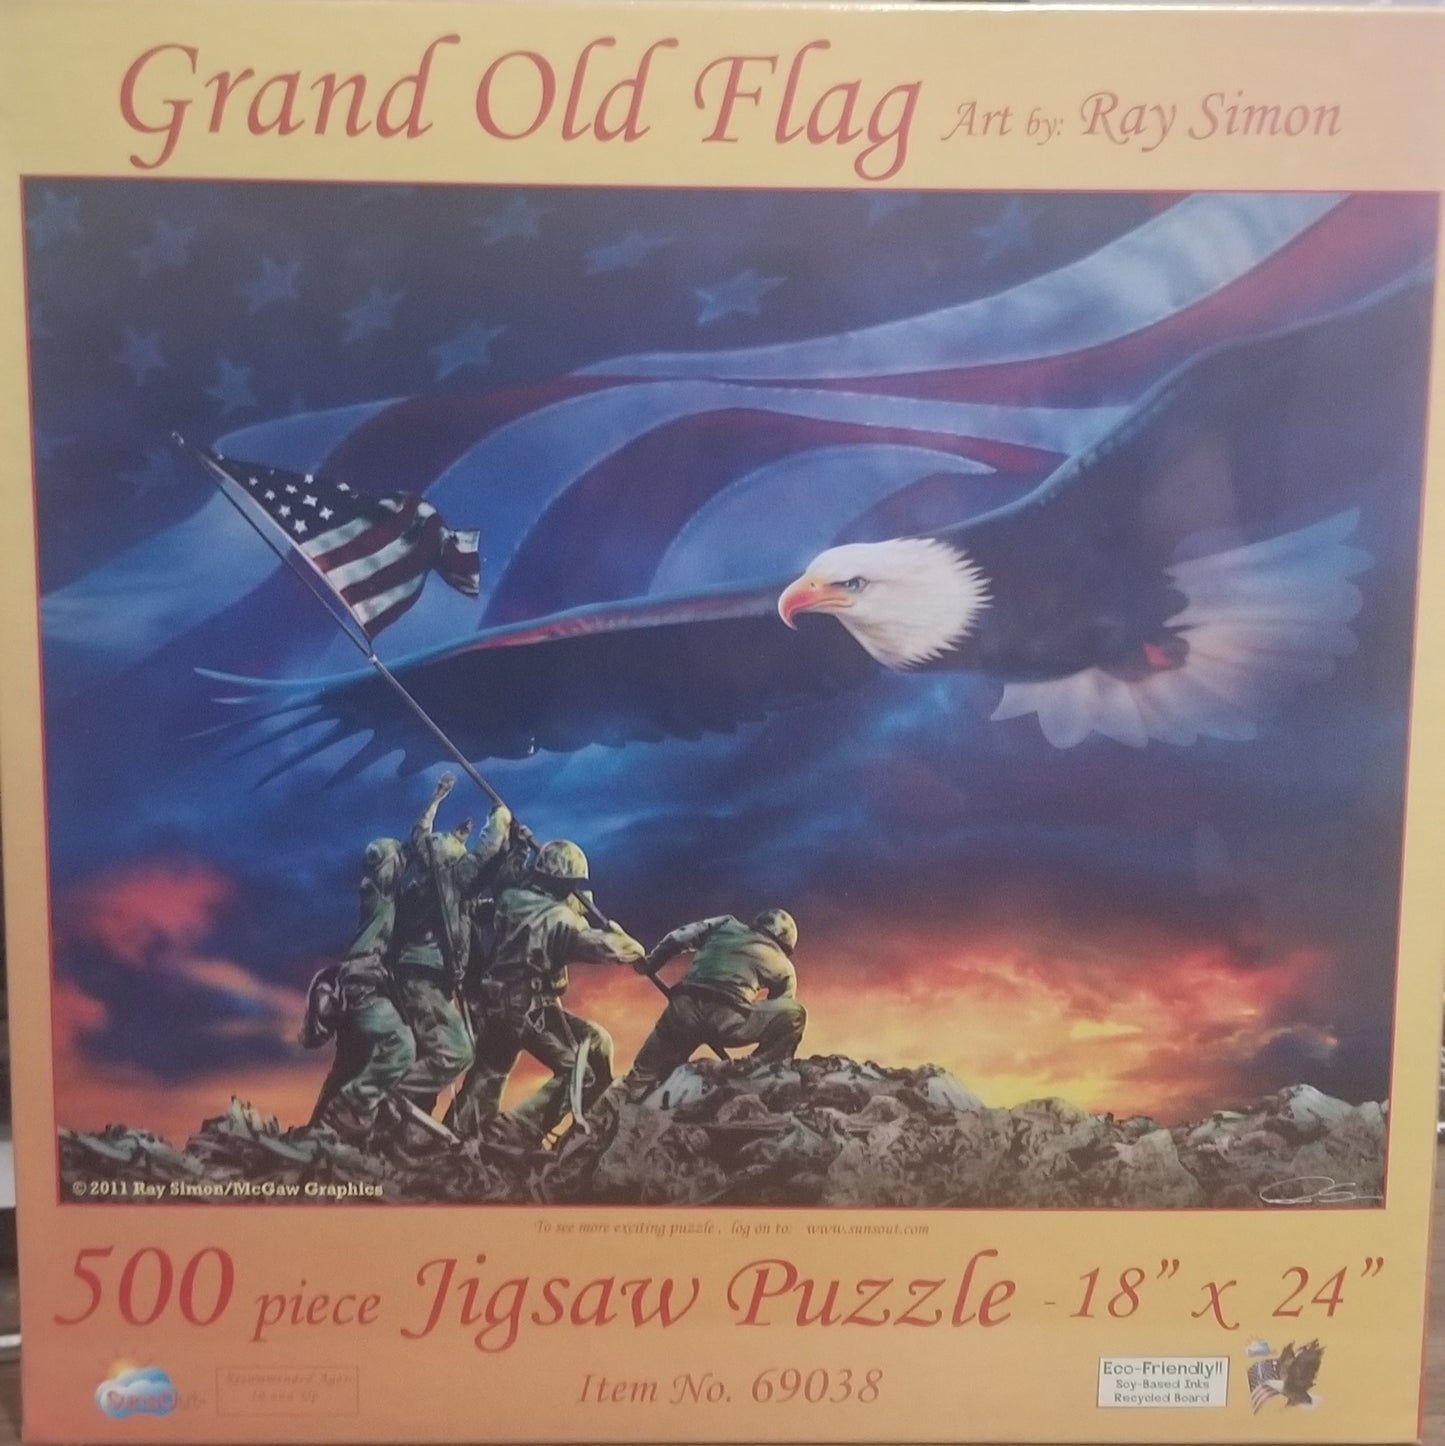 Grote oude vlag van Ray Simon, puzzel van 500 stukjes